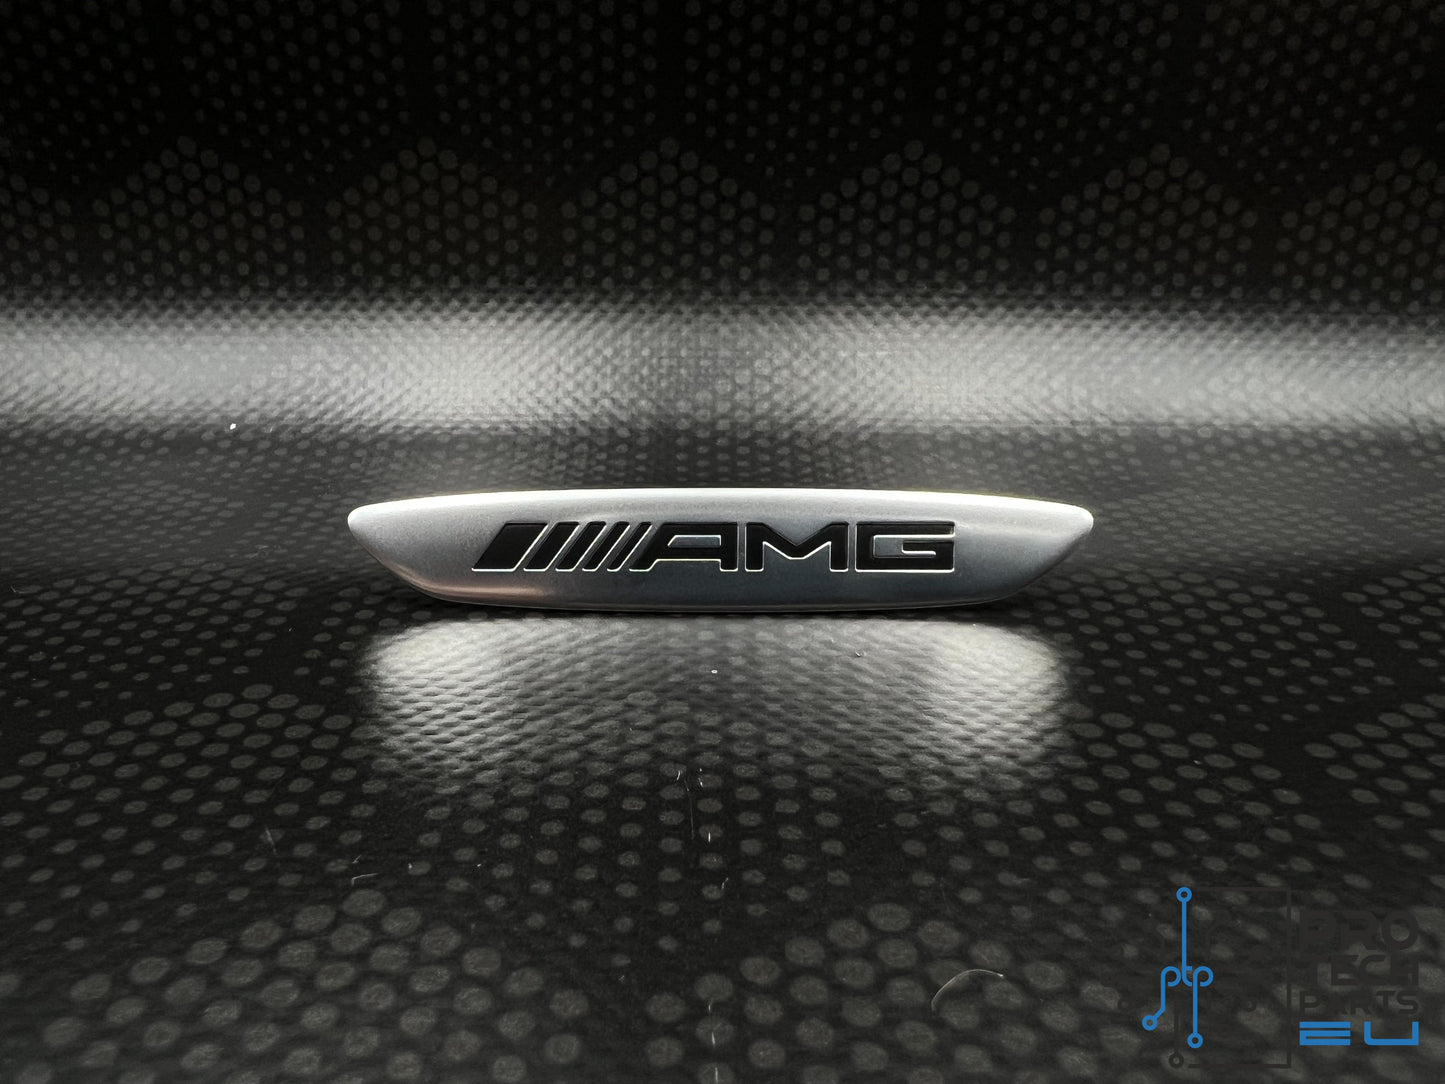 
                  
                    Mercedes-benz W222 Clasa S AMG insigna/sigla pentru capacul volanului oe nou 
                  
                